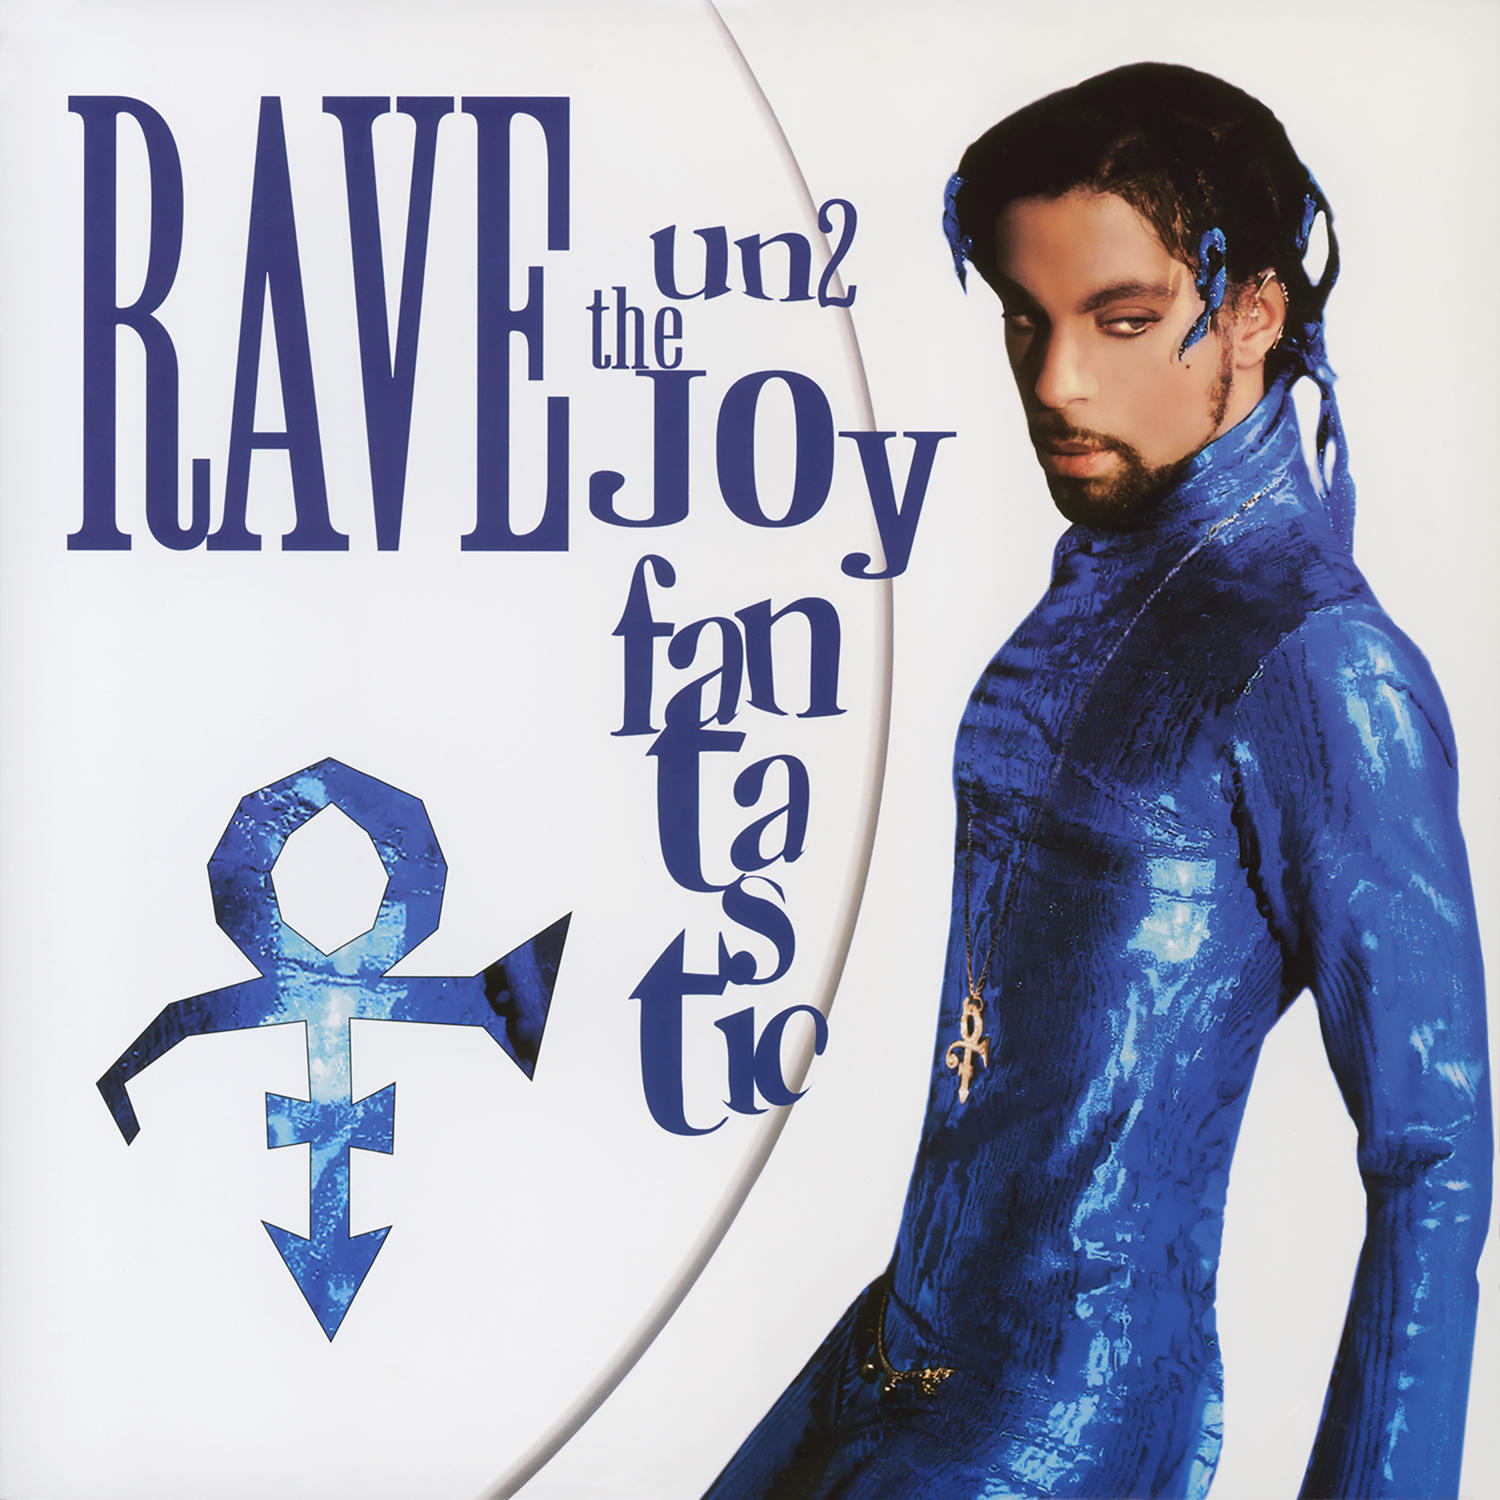 Prince - RAVE UN2 FANTASTIC - (Vinyl) JOY THE